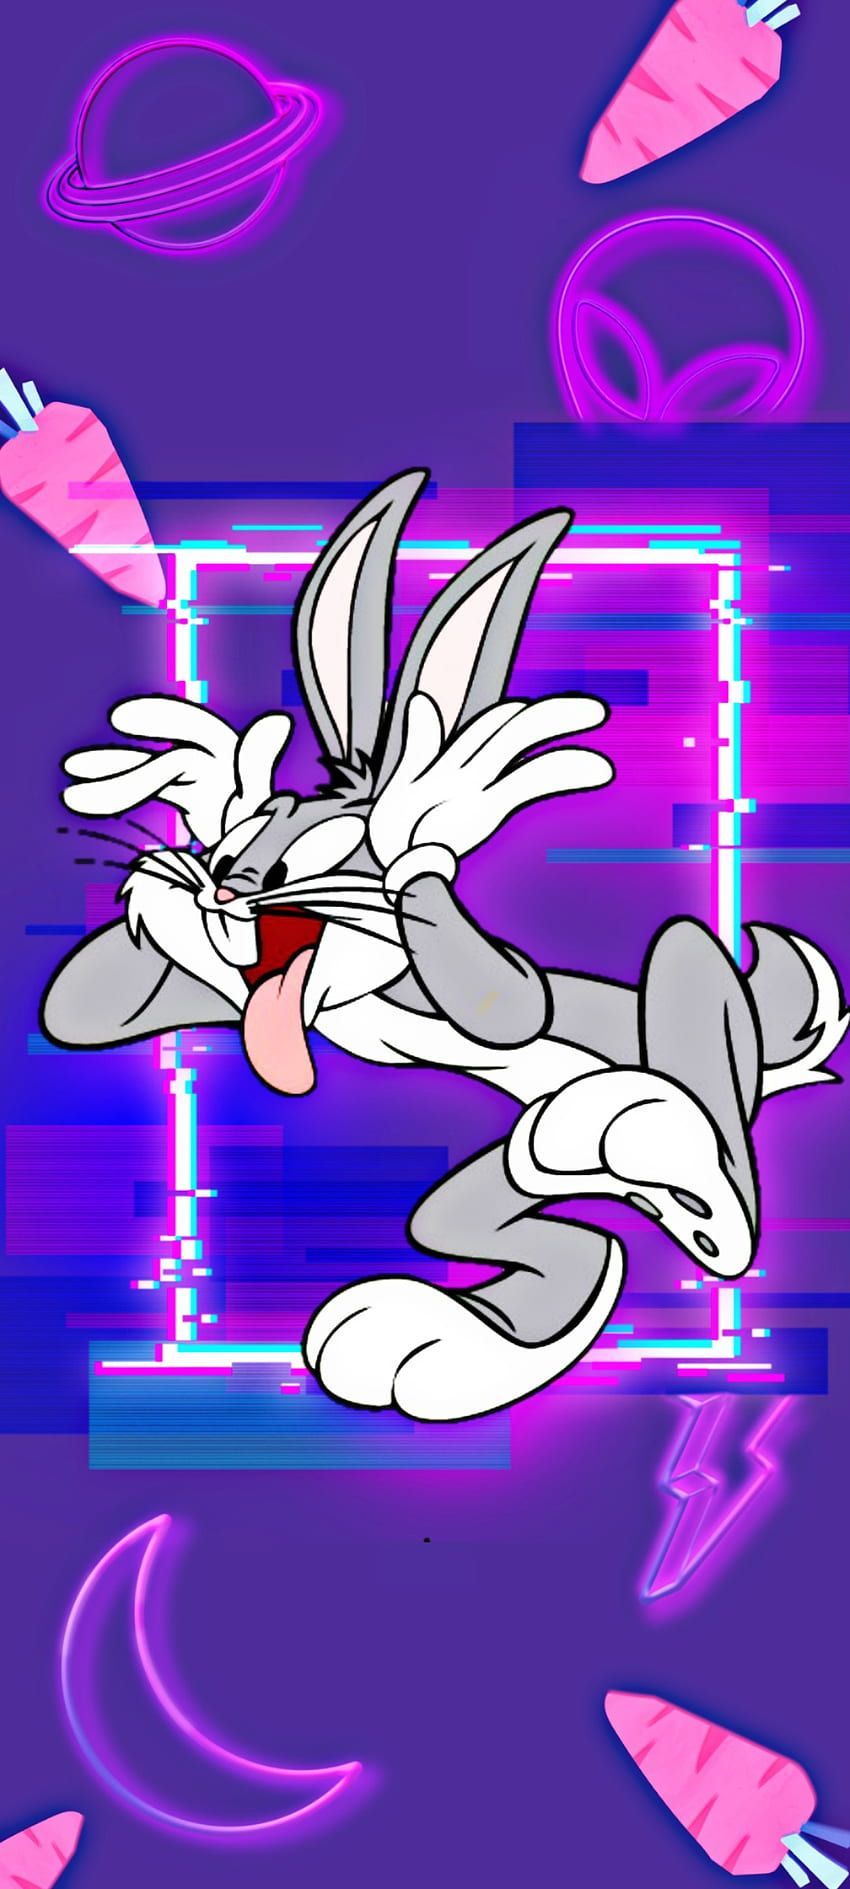 Bugs bunny wallpaper - Bugs Bunny